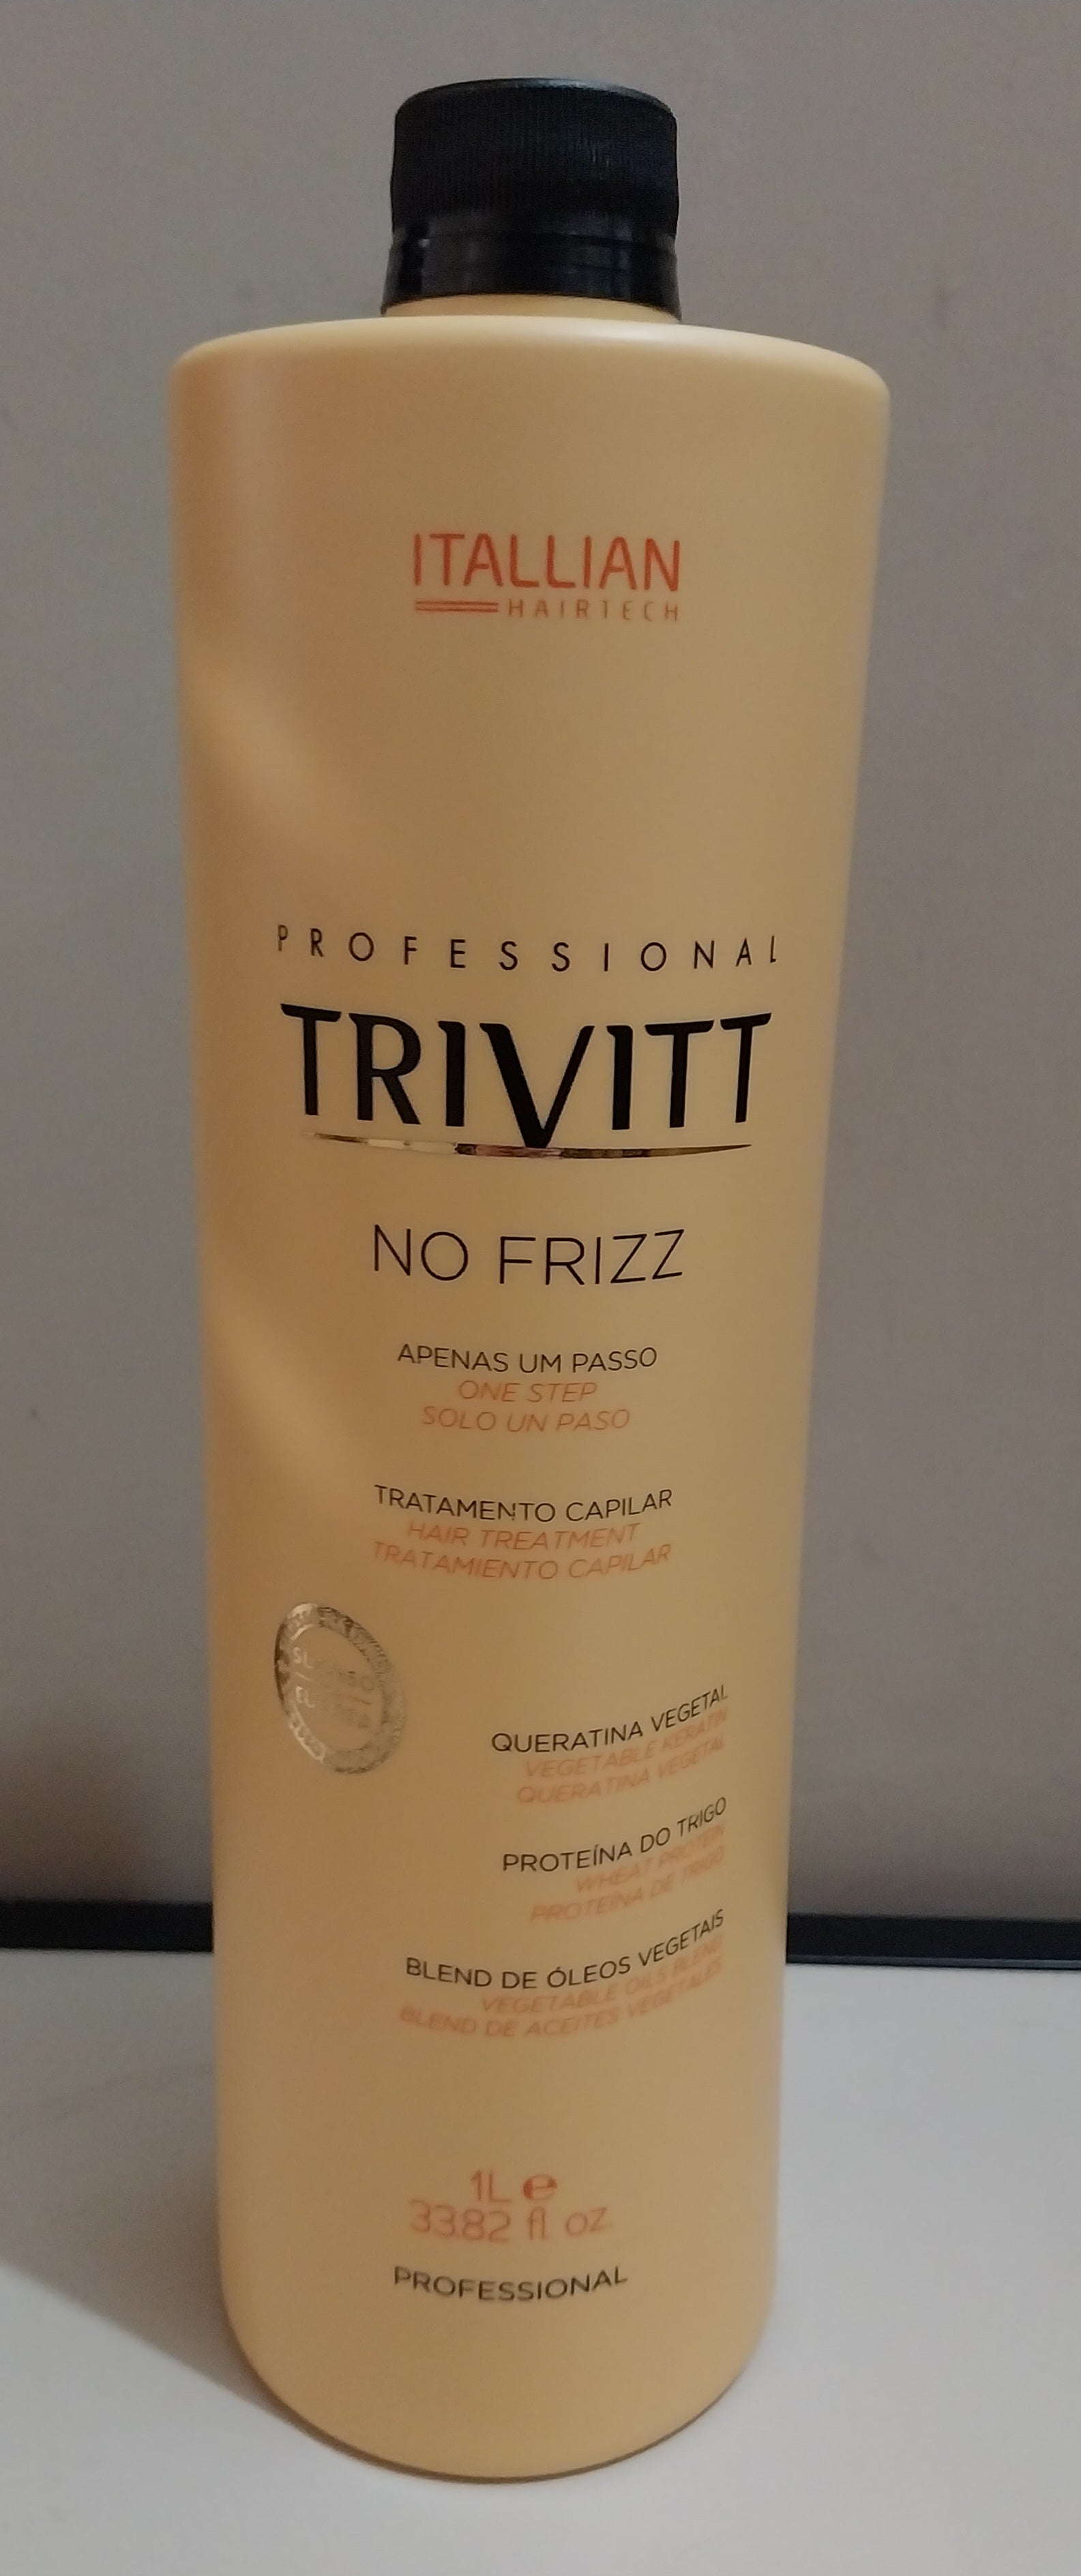 Itallian Hair Tech Hair Serum and Oils 12 Oils Blend New Trivitt Liss Progressive Single Step 1L - Itallian Hair Tech